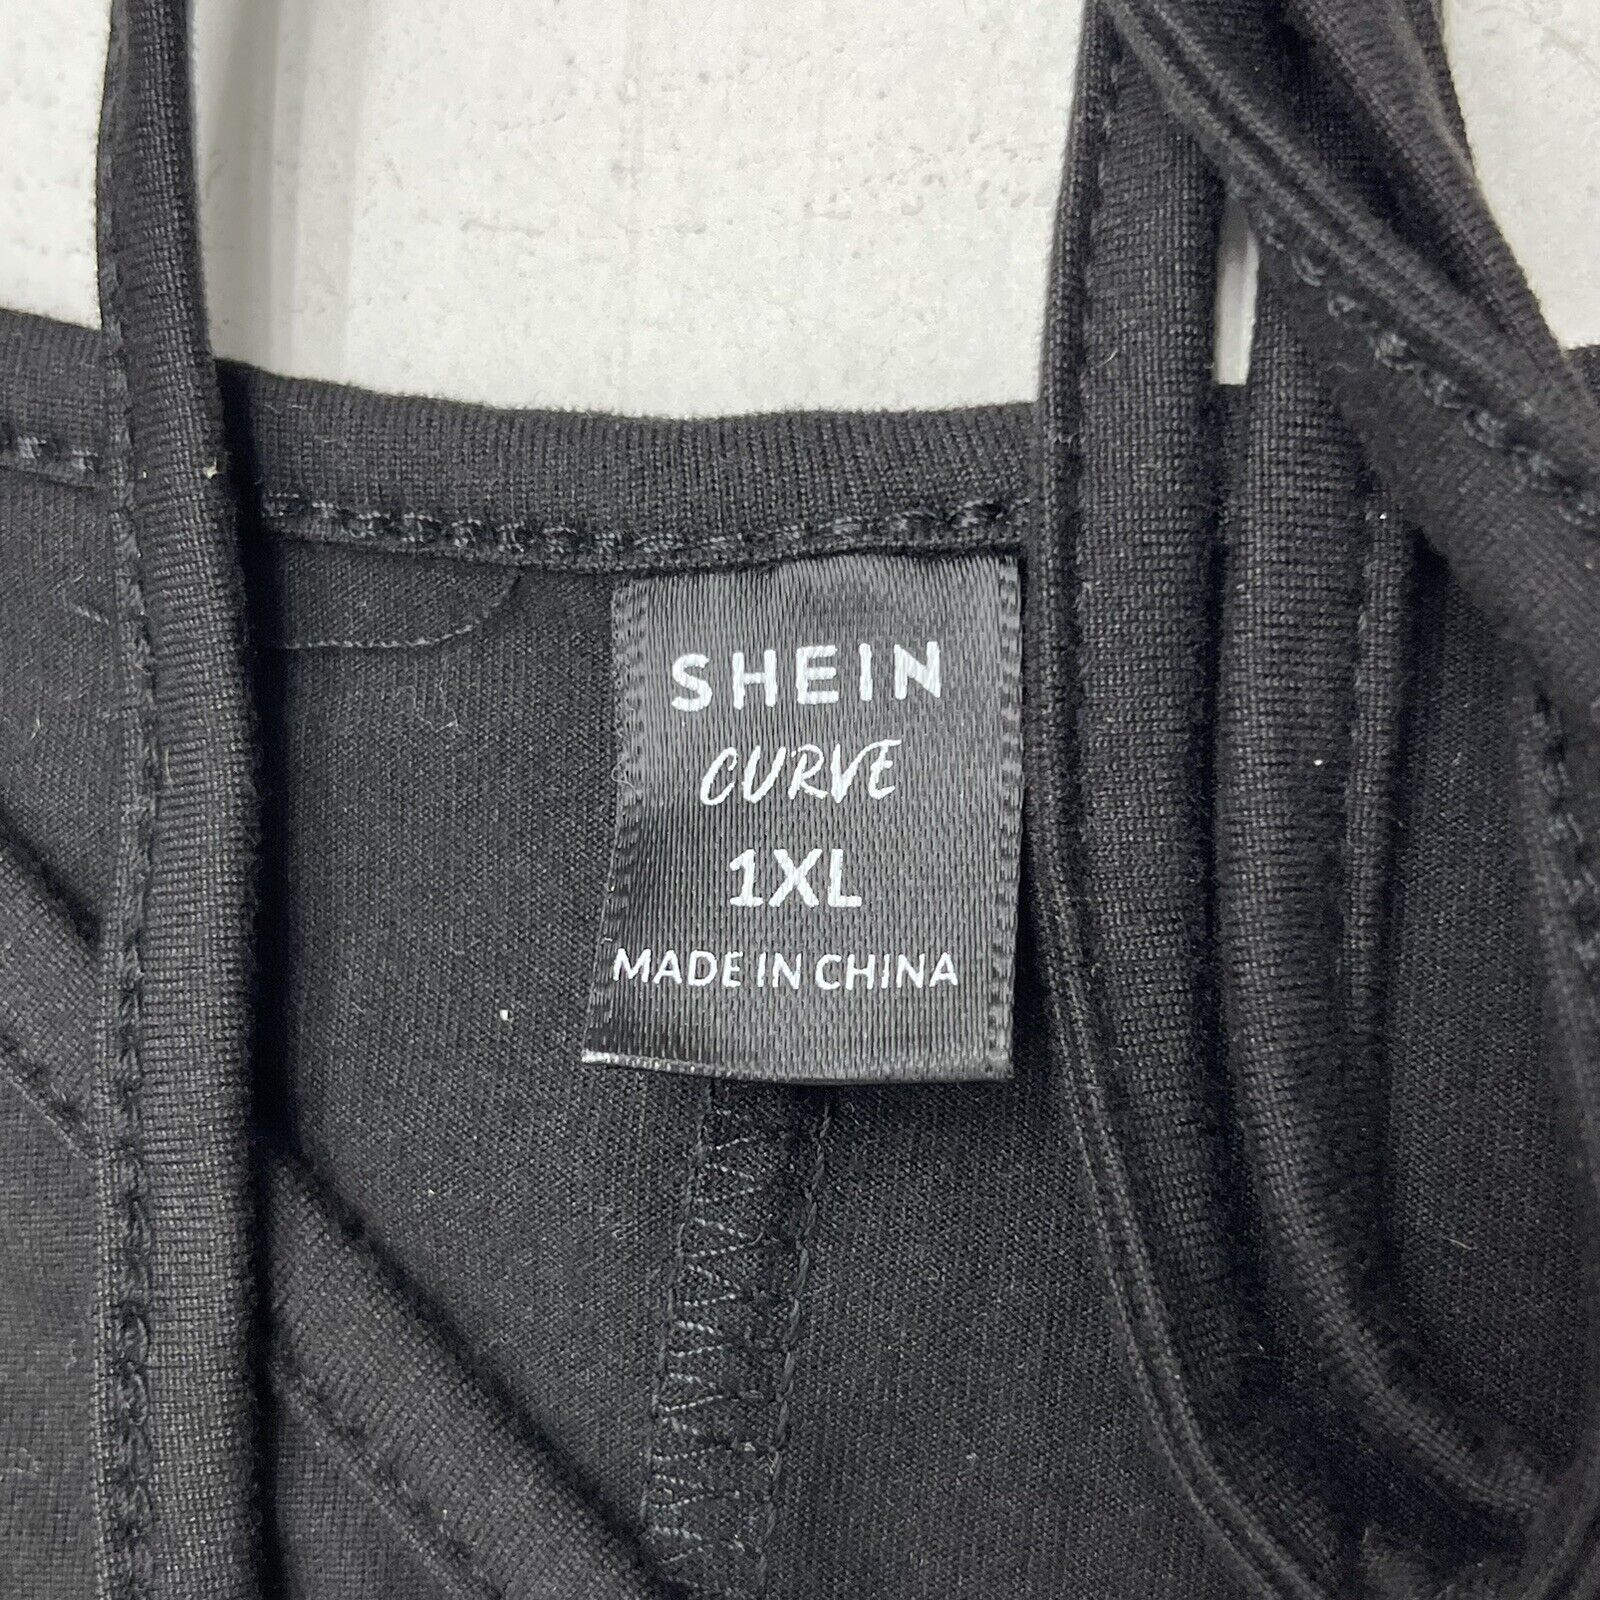 Shein Curve Black Sleeveless Dress Women's Size 1XL NEW - beyond exchange